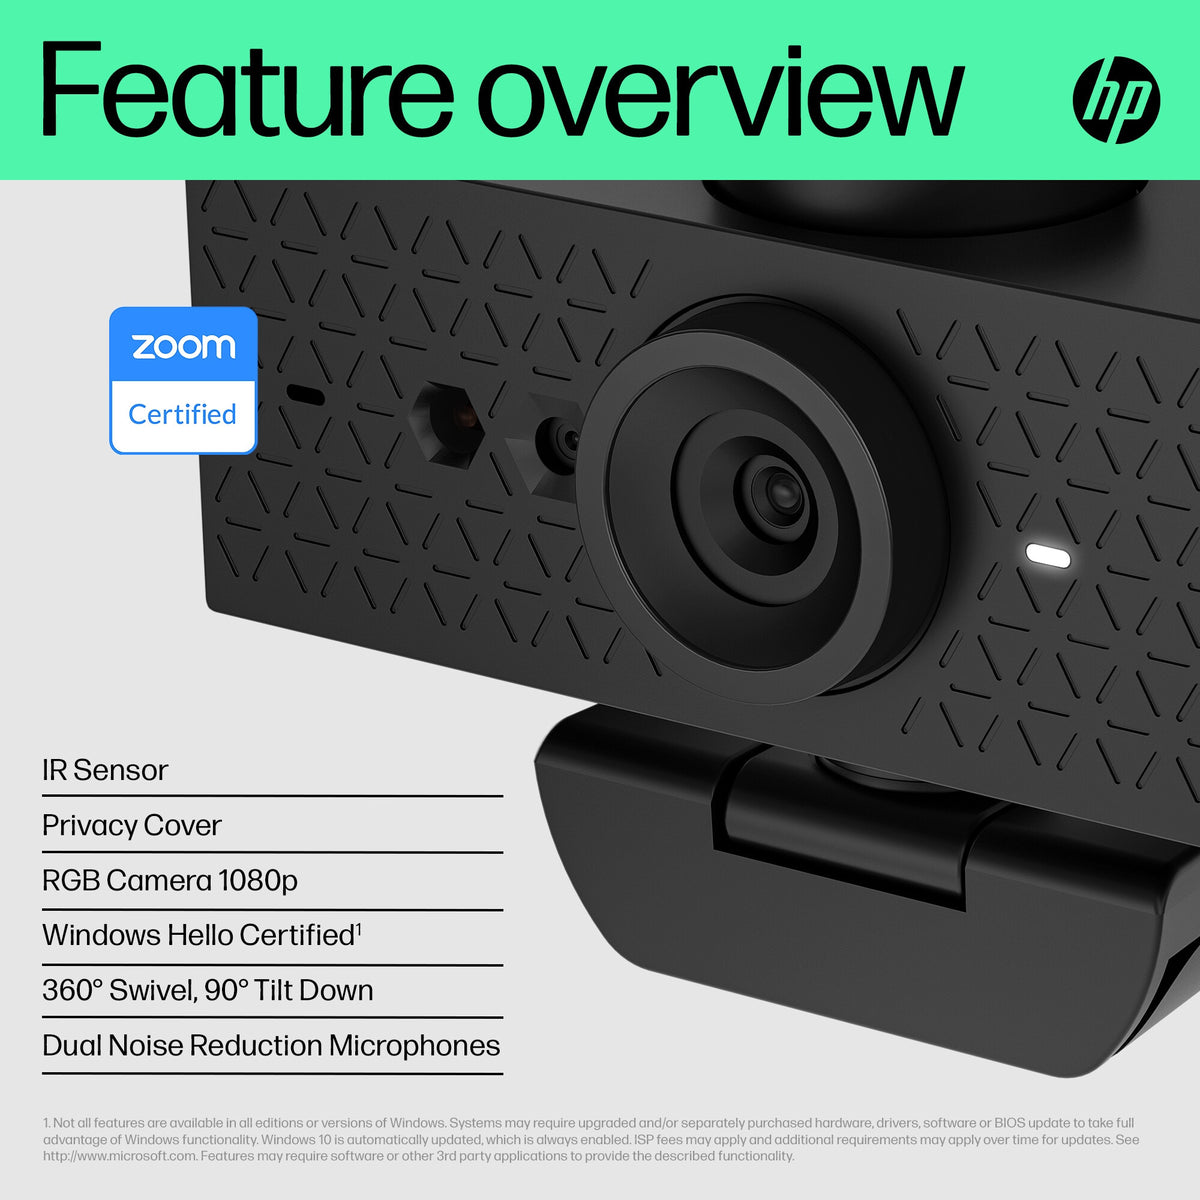 HP 620 - 4 MP 1920 x 1080p Full HD Webcam